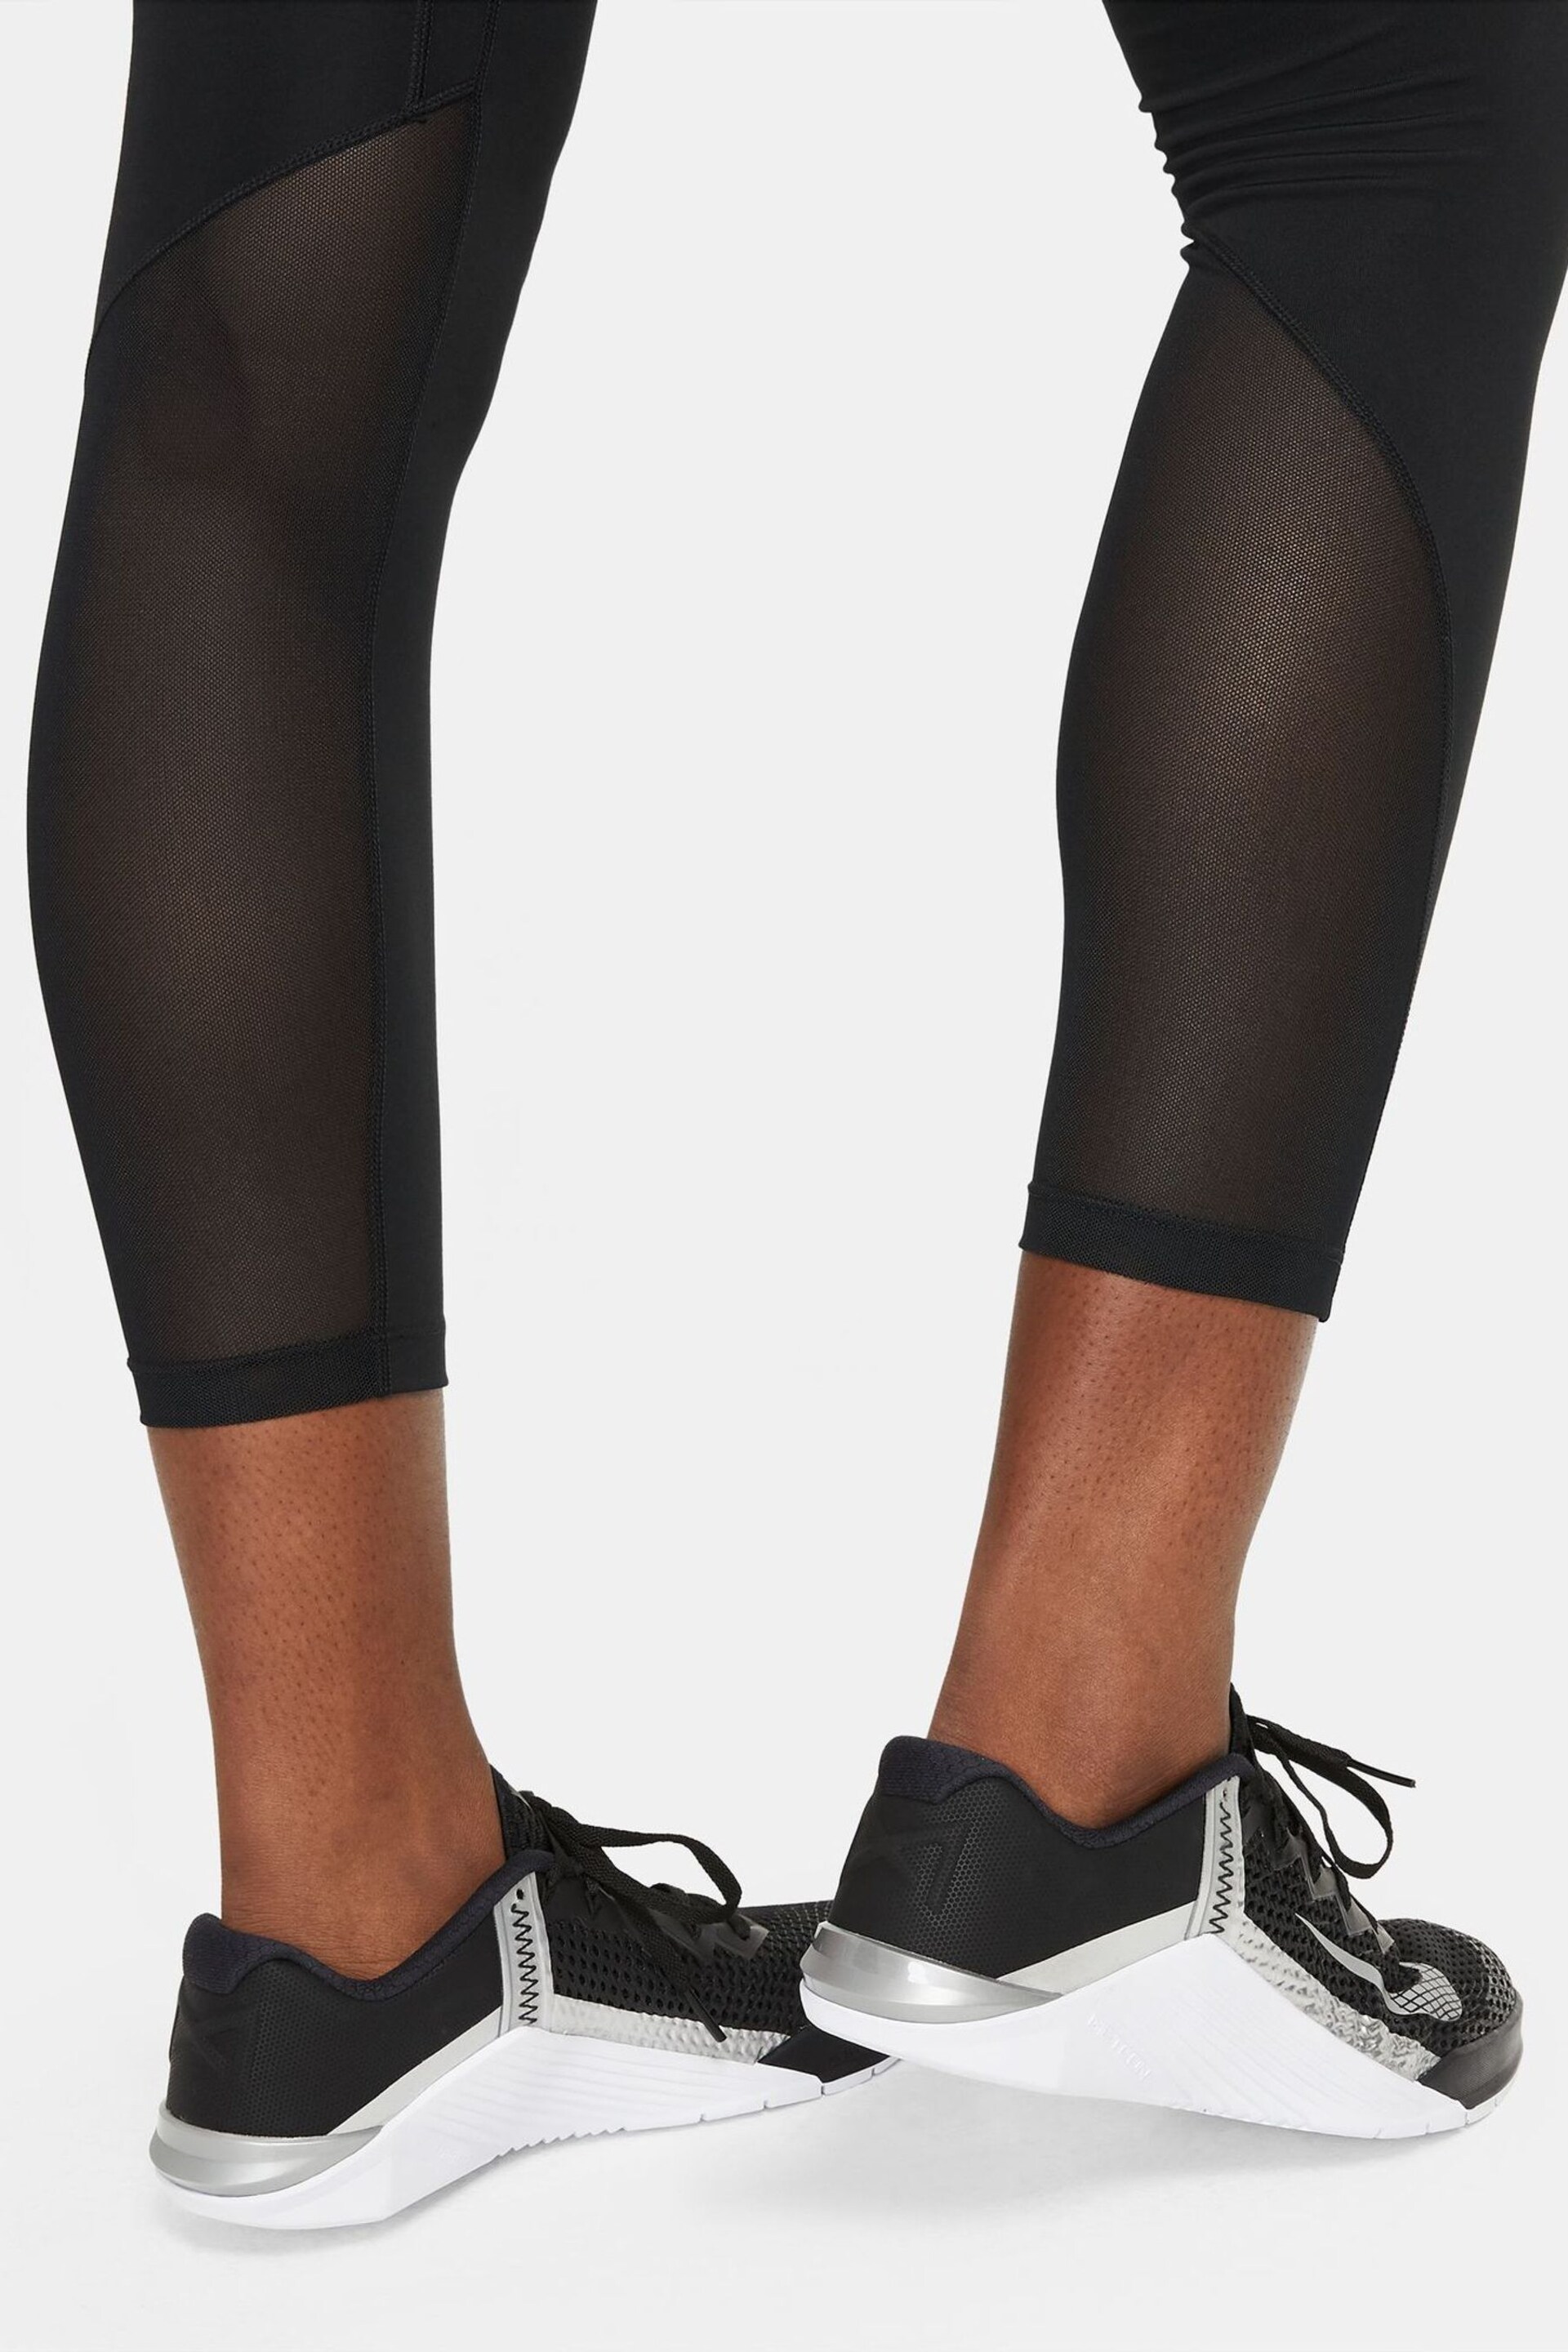 Nike Black One Mid Rise Leggings - Image 6 of 7